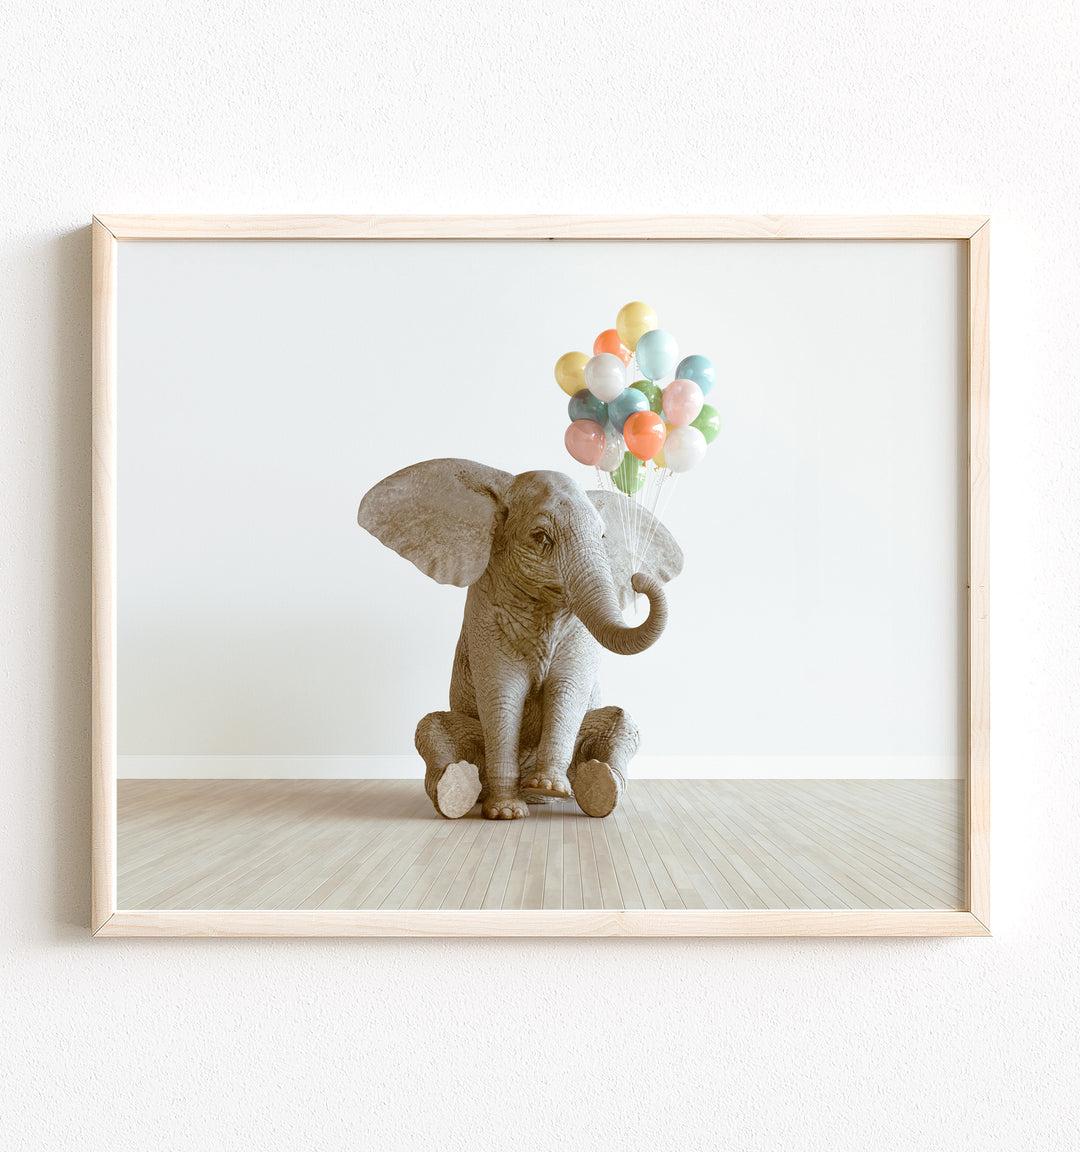 Elephant with Balloons Art Print